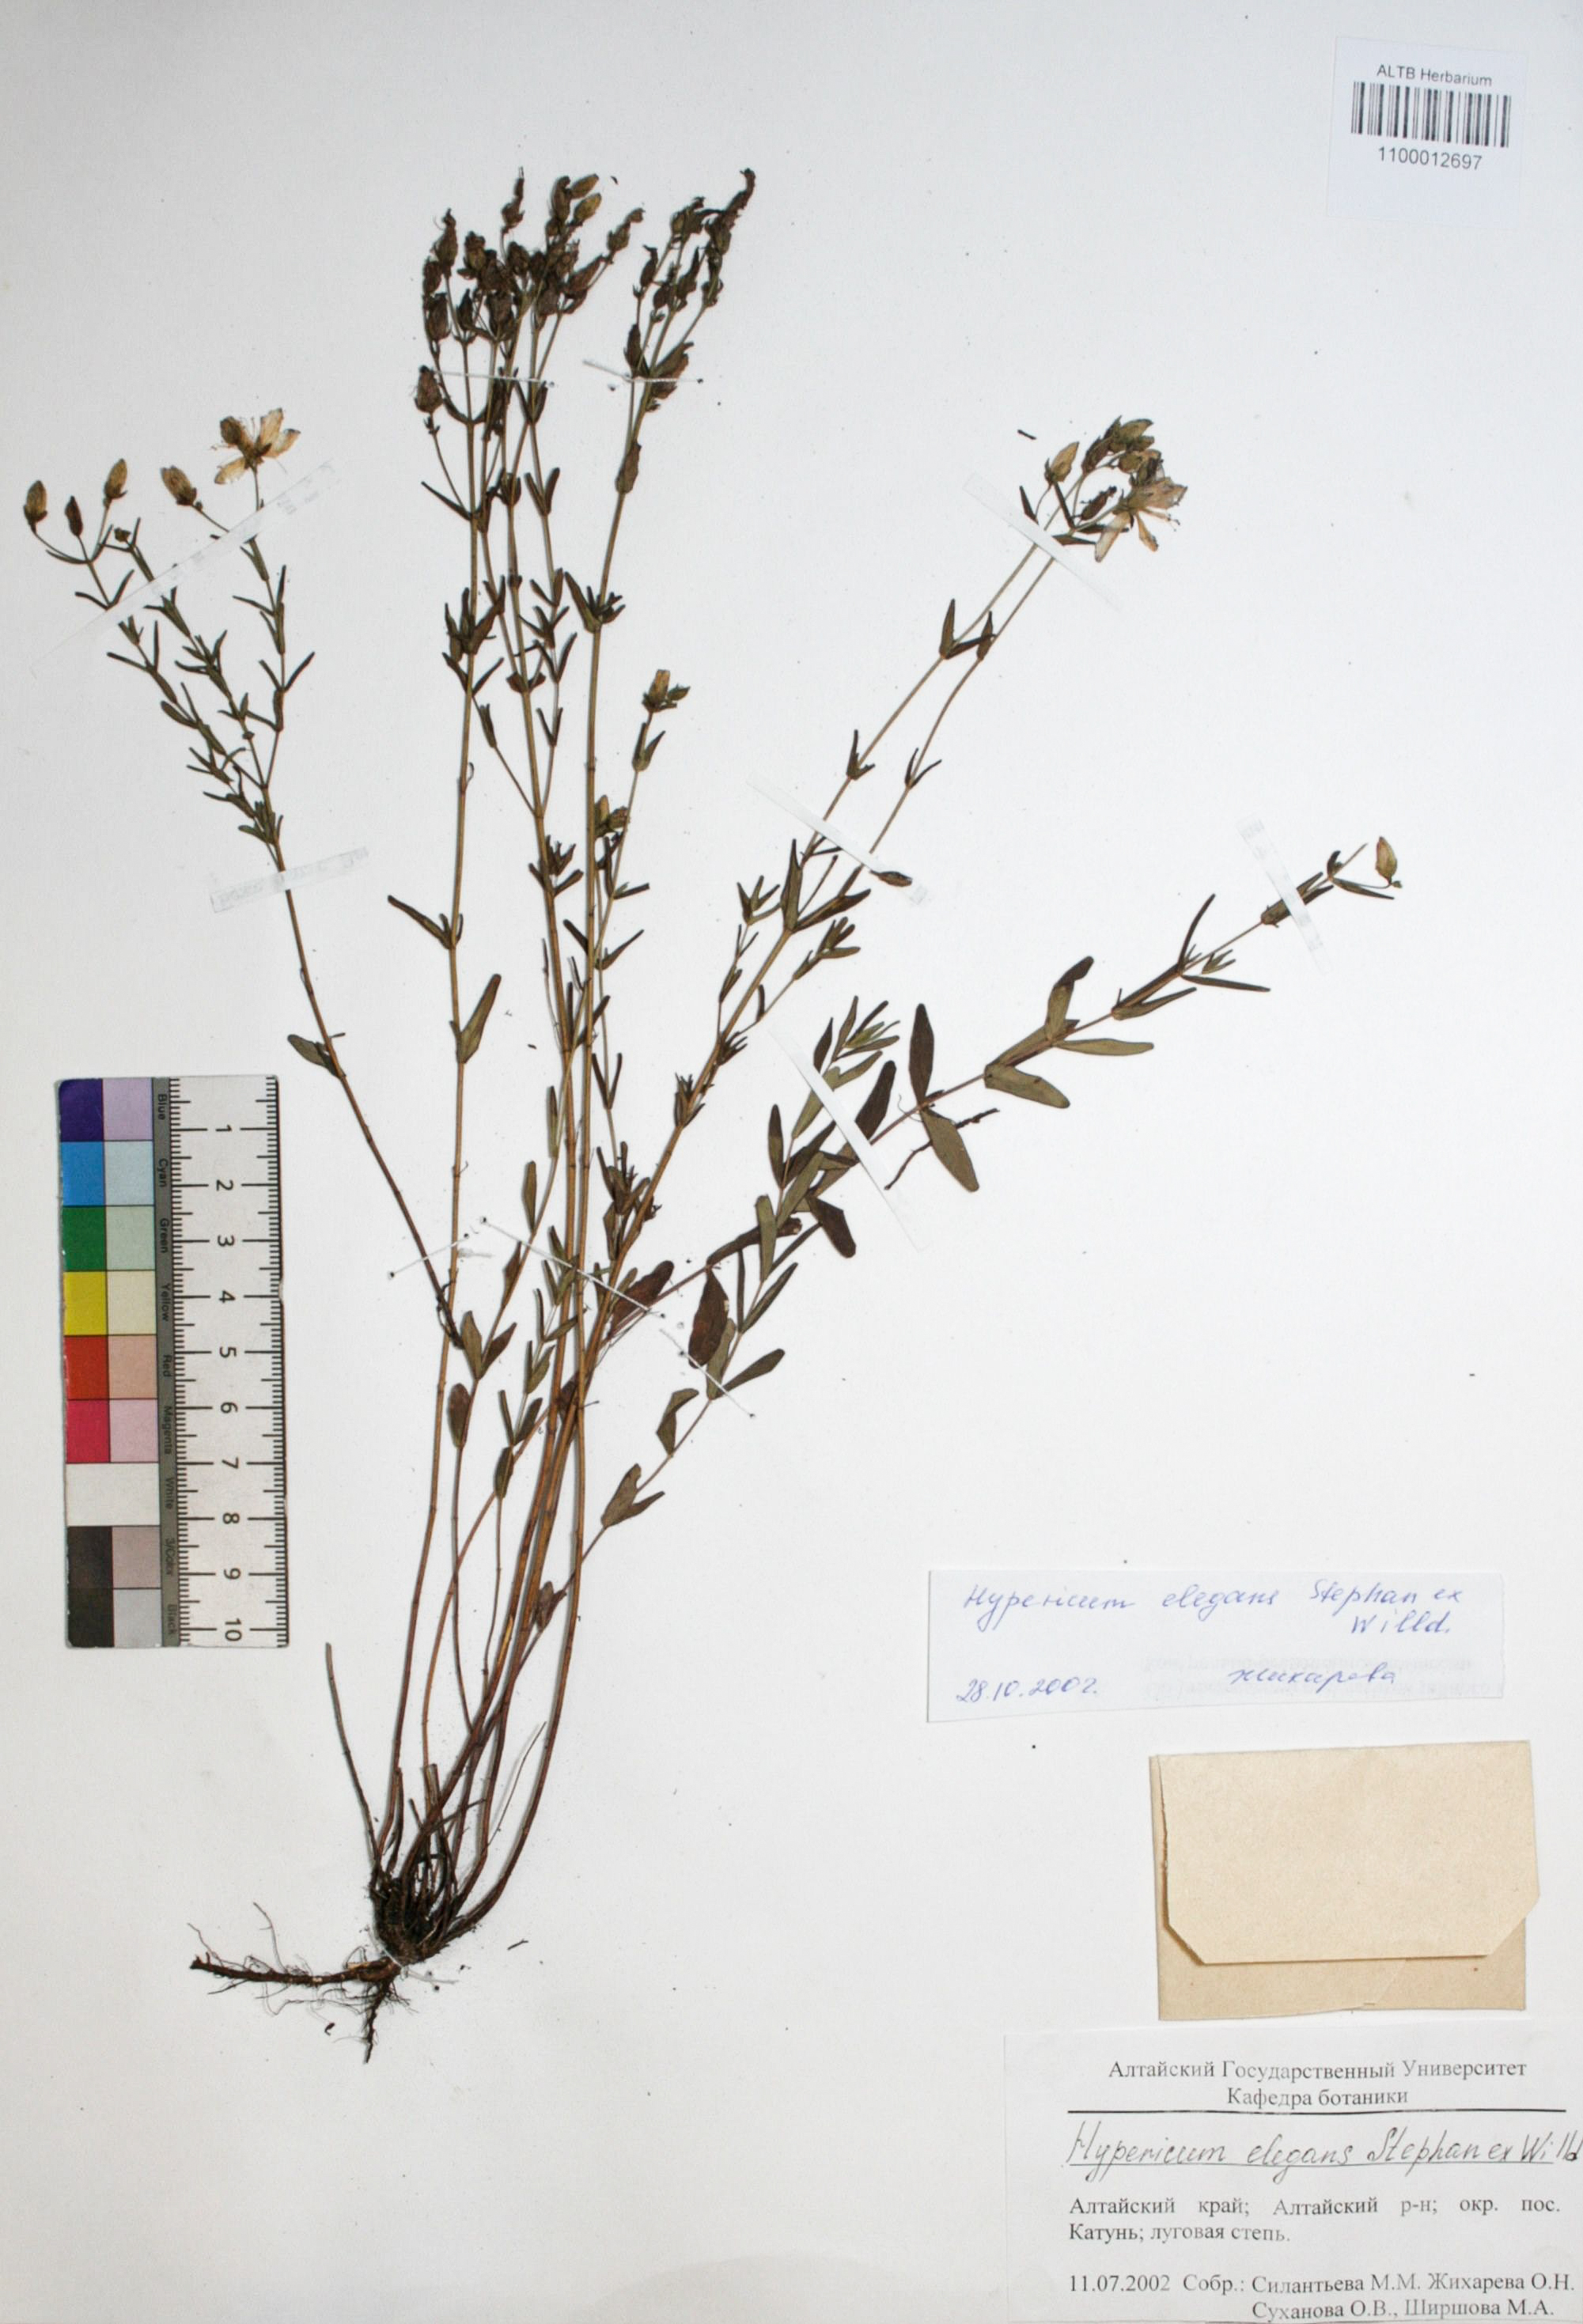 Hypericum elegans Stephan ex Willd.